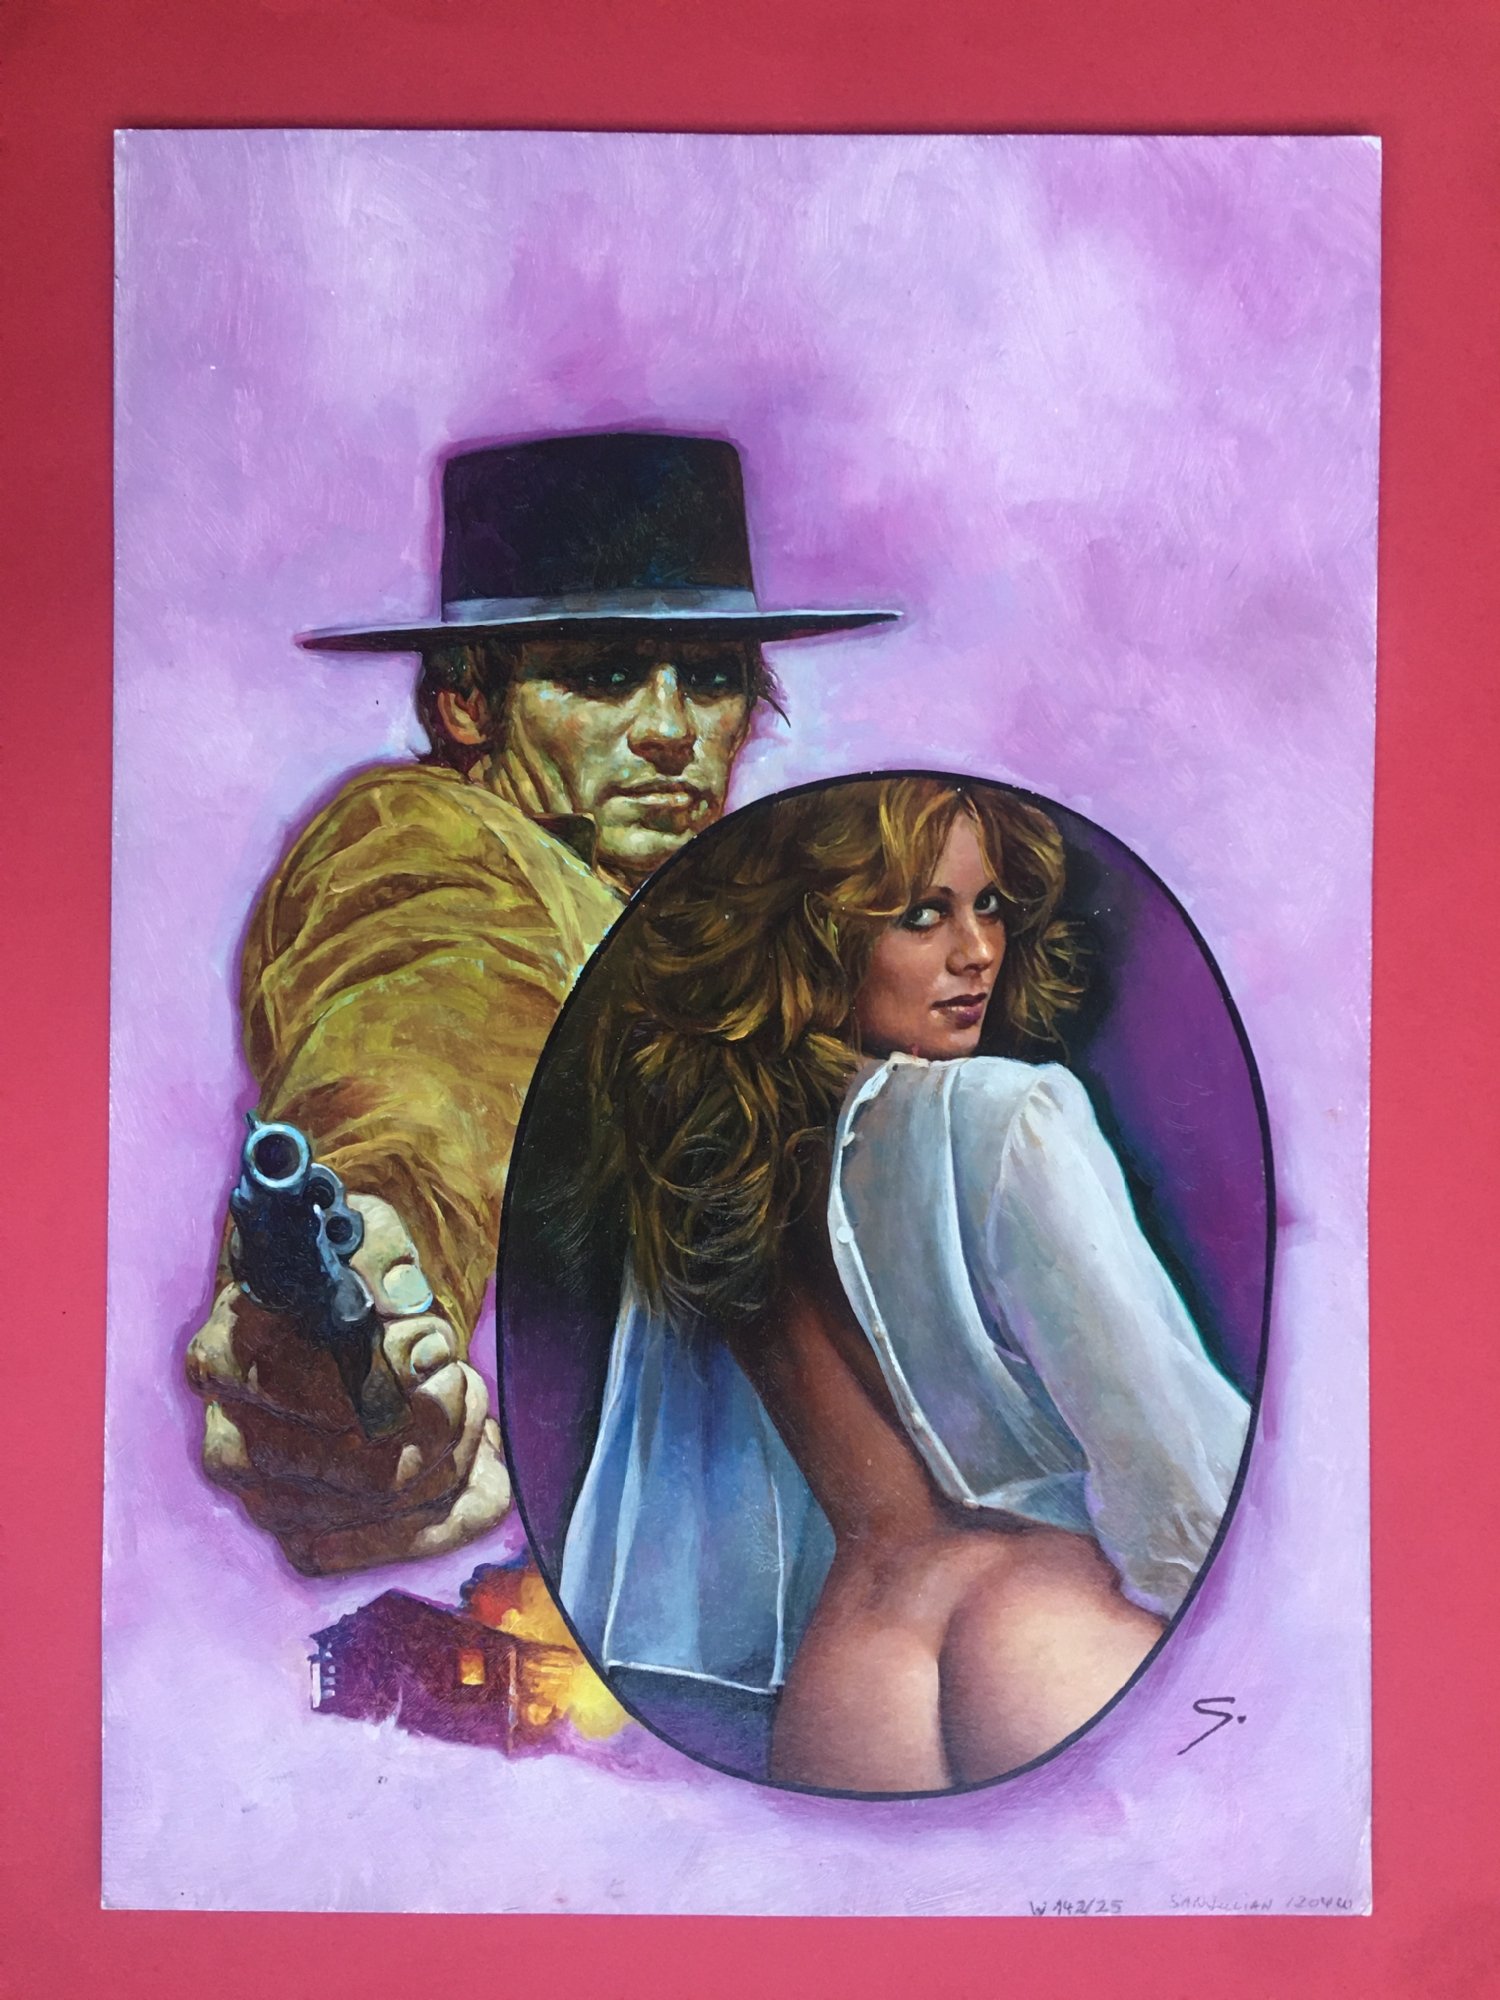 Sanjulian Xxx Com - SANJULIAN WESTERN BASTEI BOOK JACK SLANE COVER FORSALE , in ENRIQUE  ALONSO's XXX. FOR SALE Comic Art Gallery Room